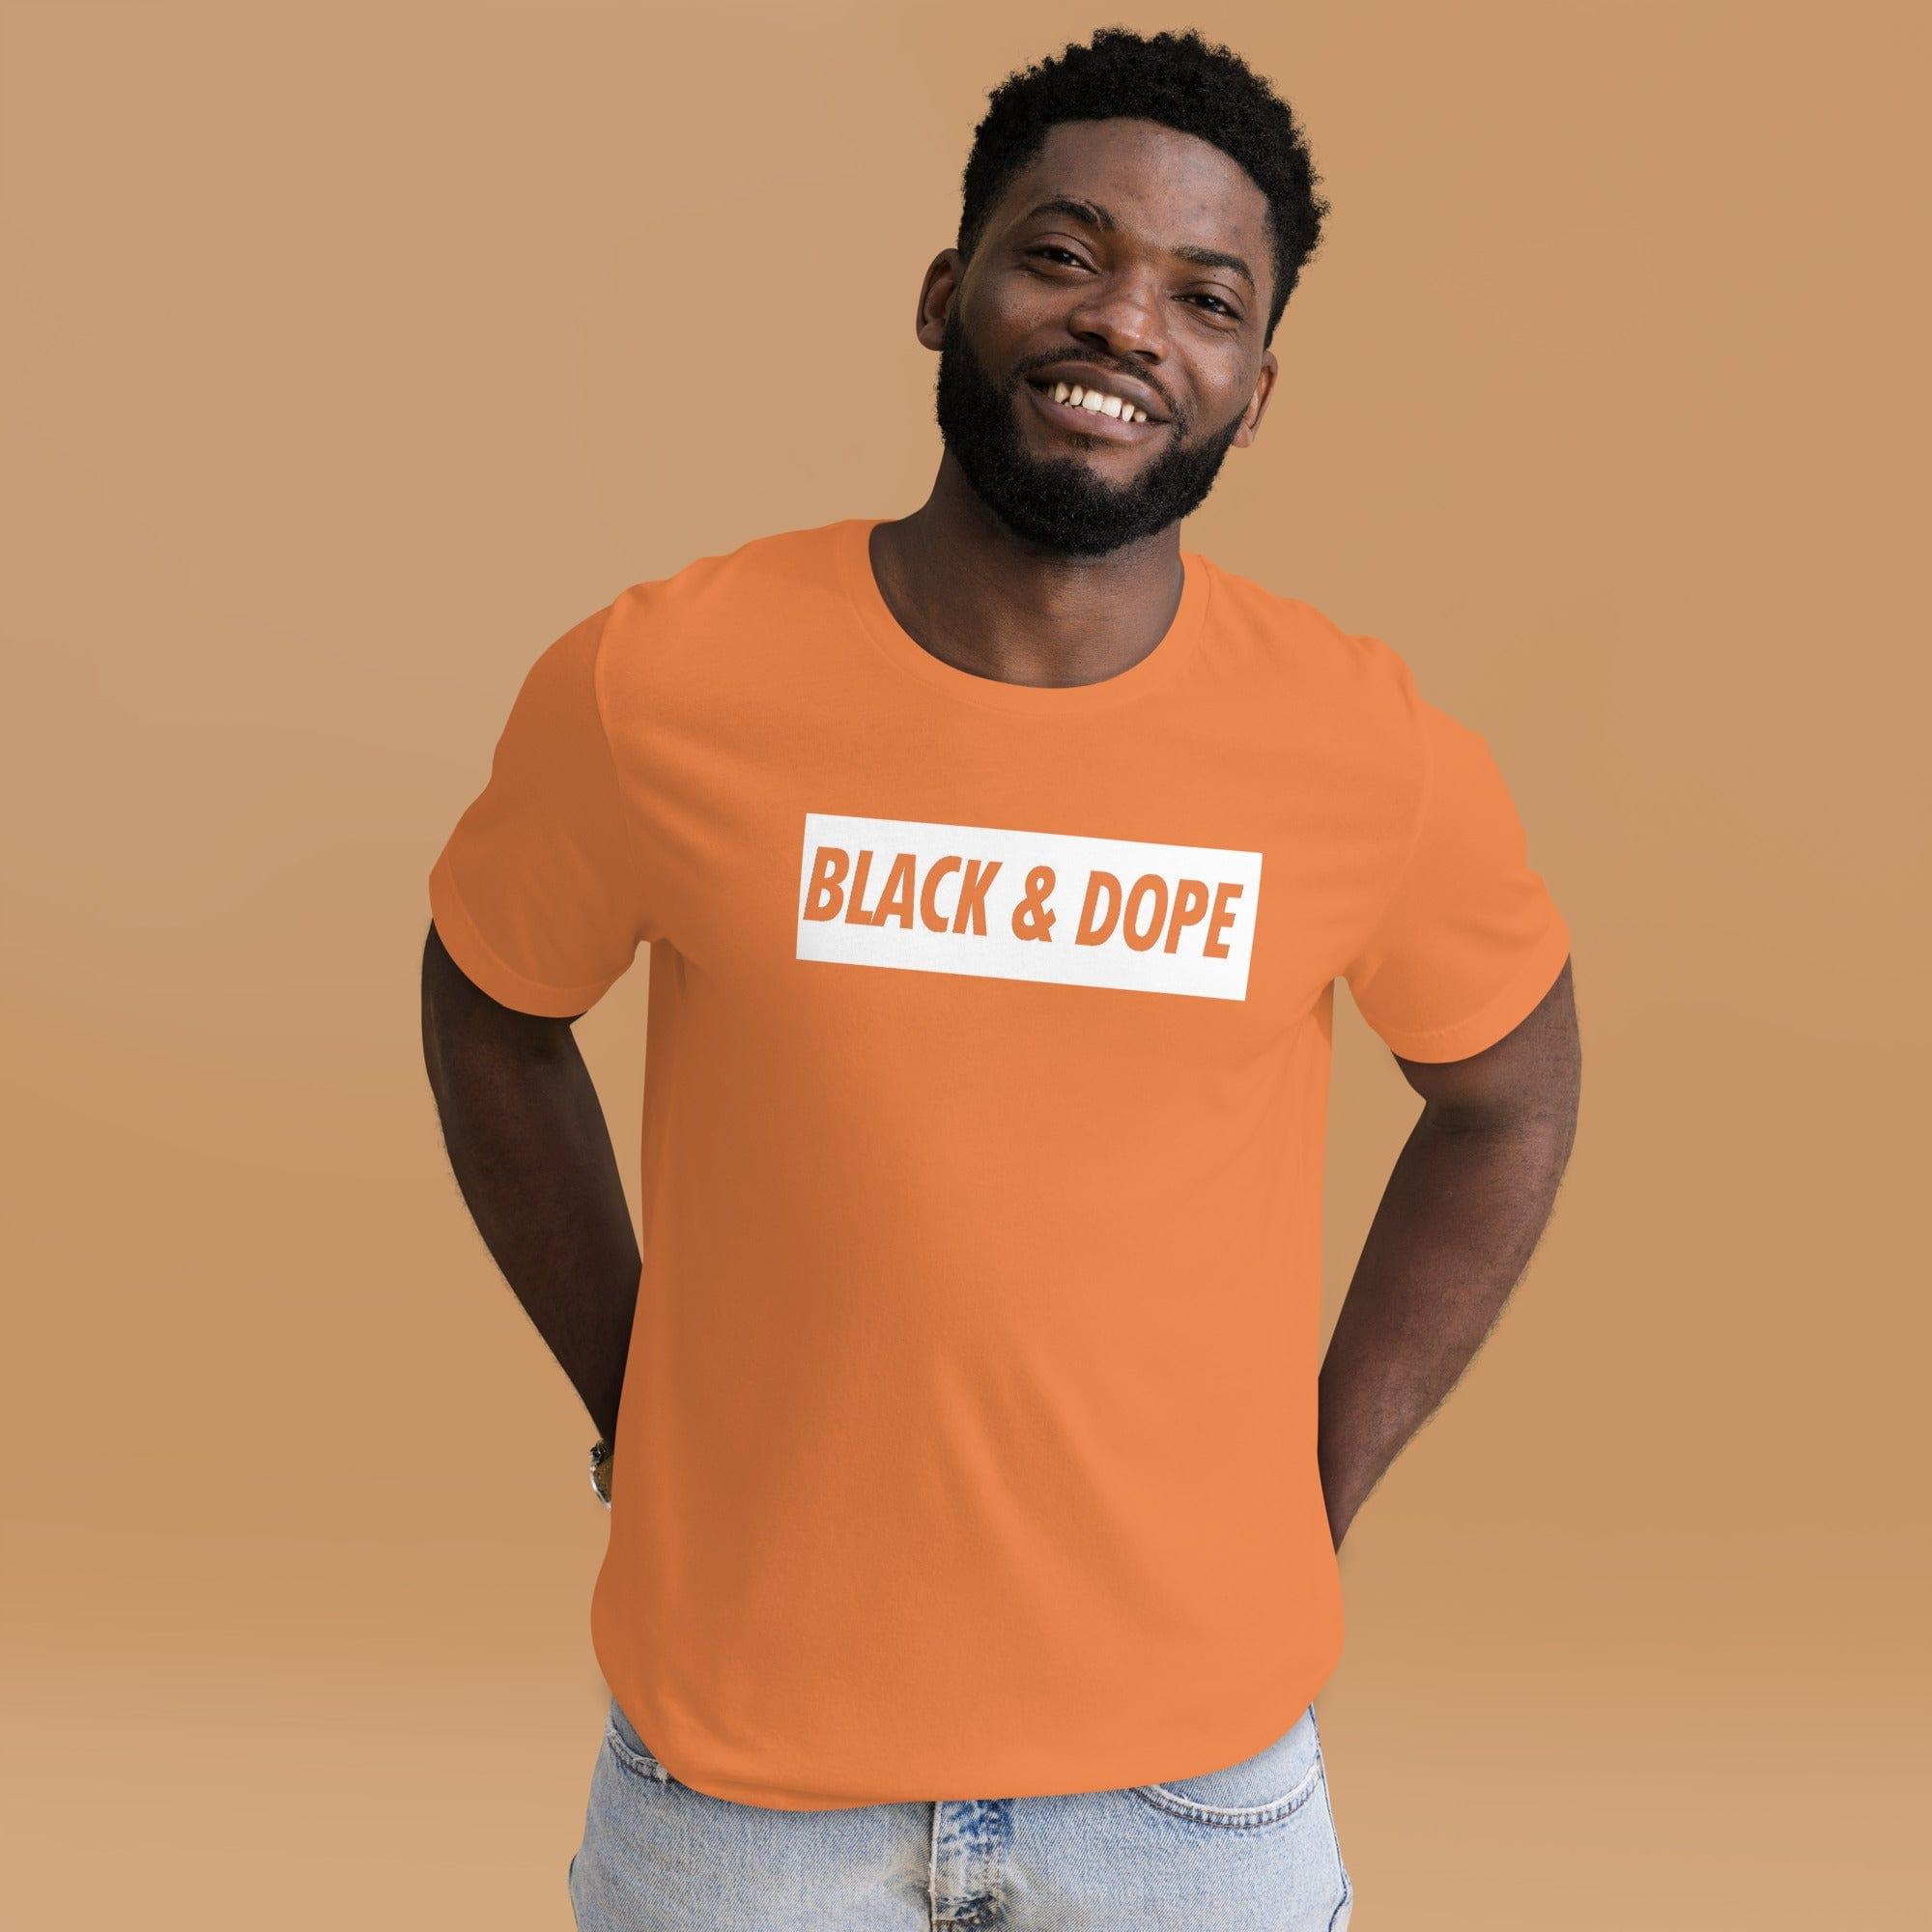 Black Pride T-shirt Black and Dope Short Sleeve Unisex Top - TopKoalaTee